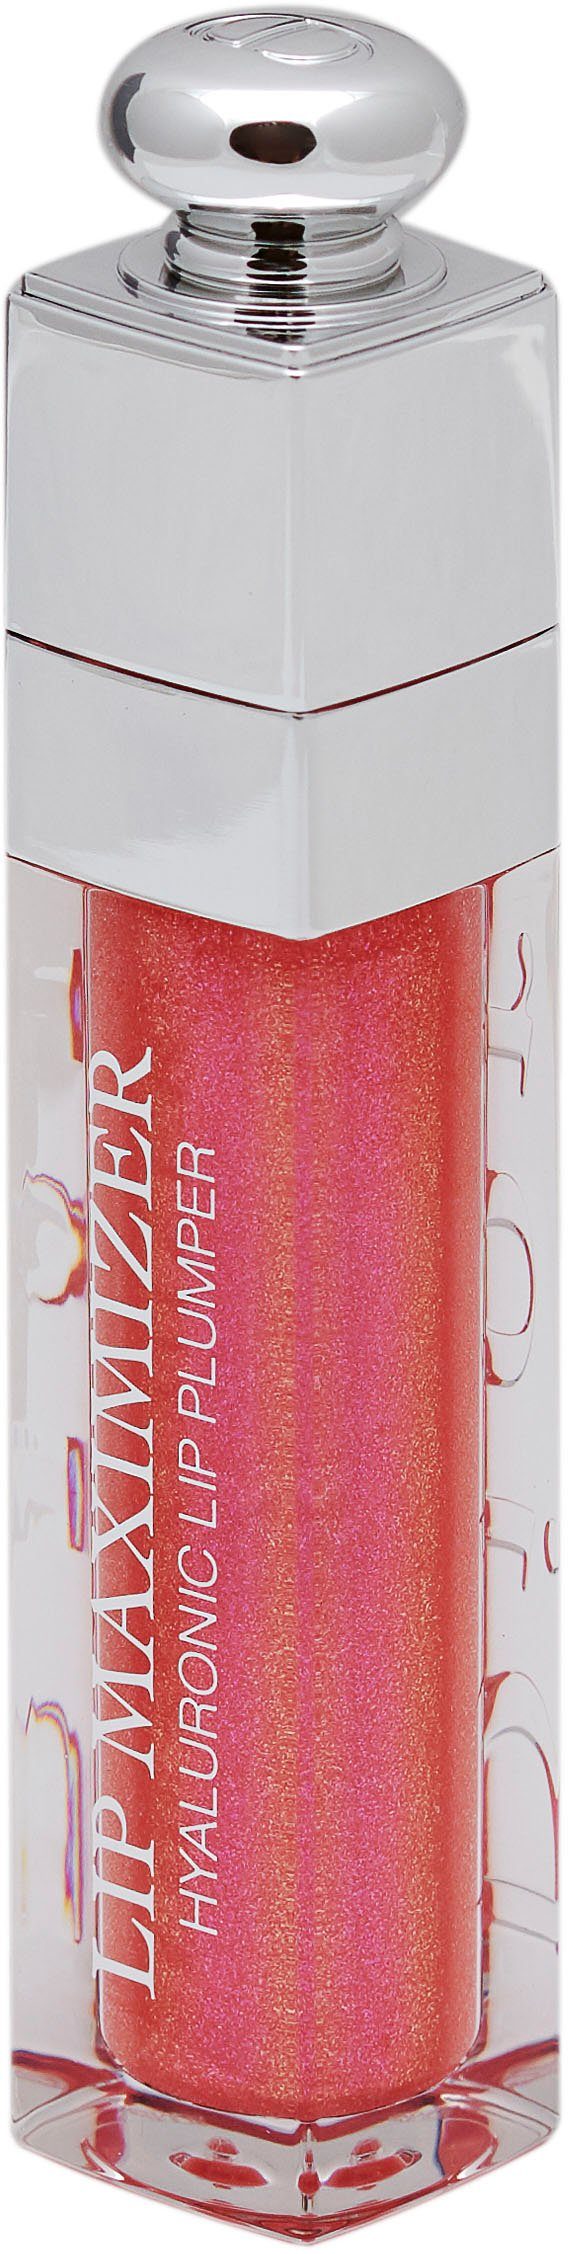 Dior Lipgloss Addict Lip Maximizer Holo 010 Pink